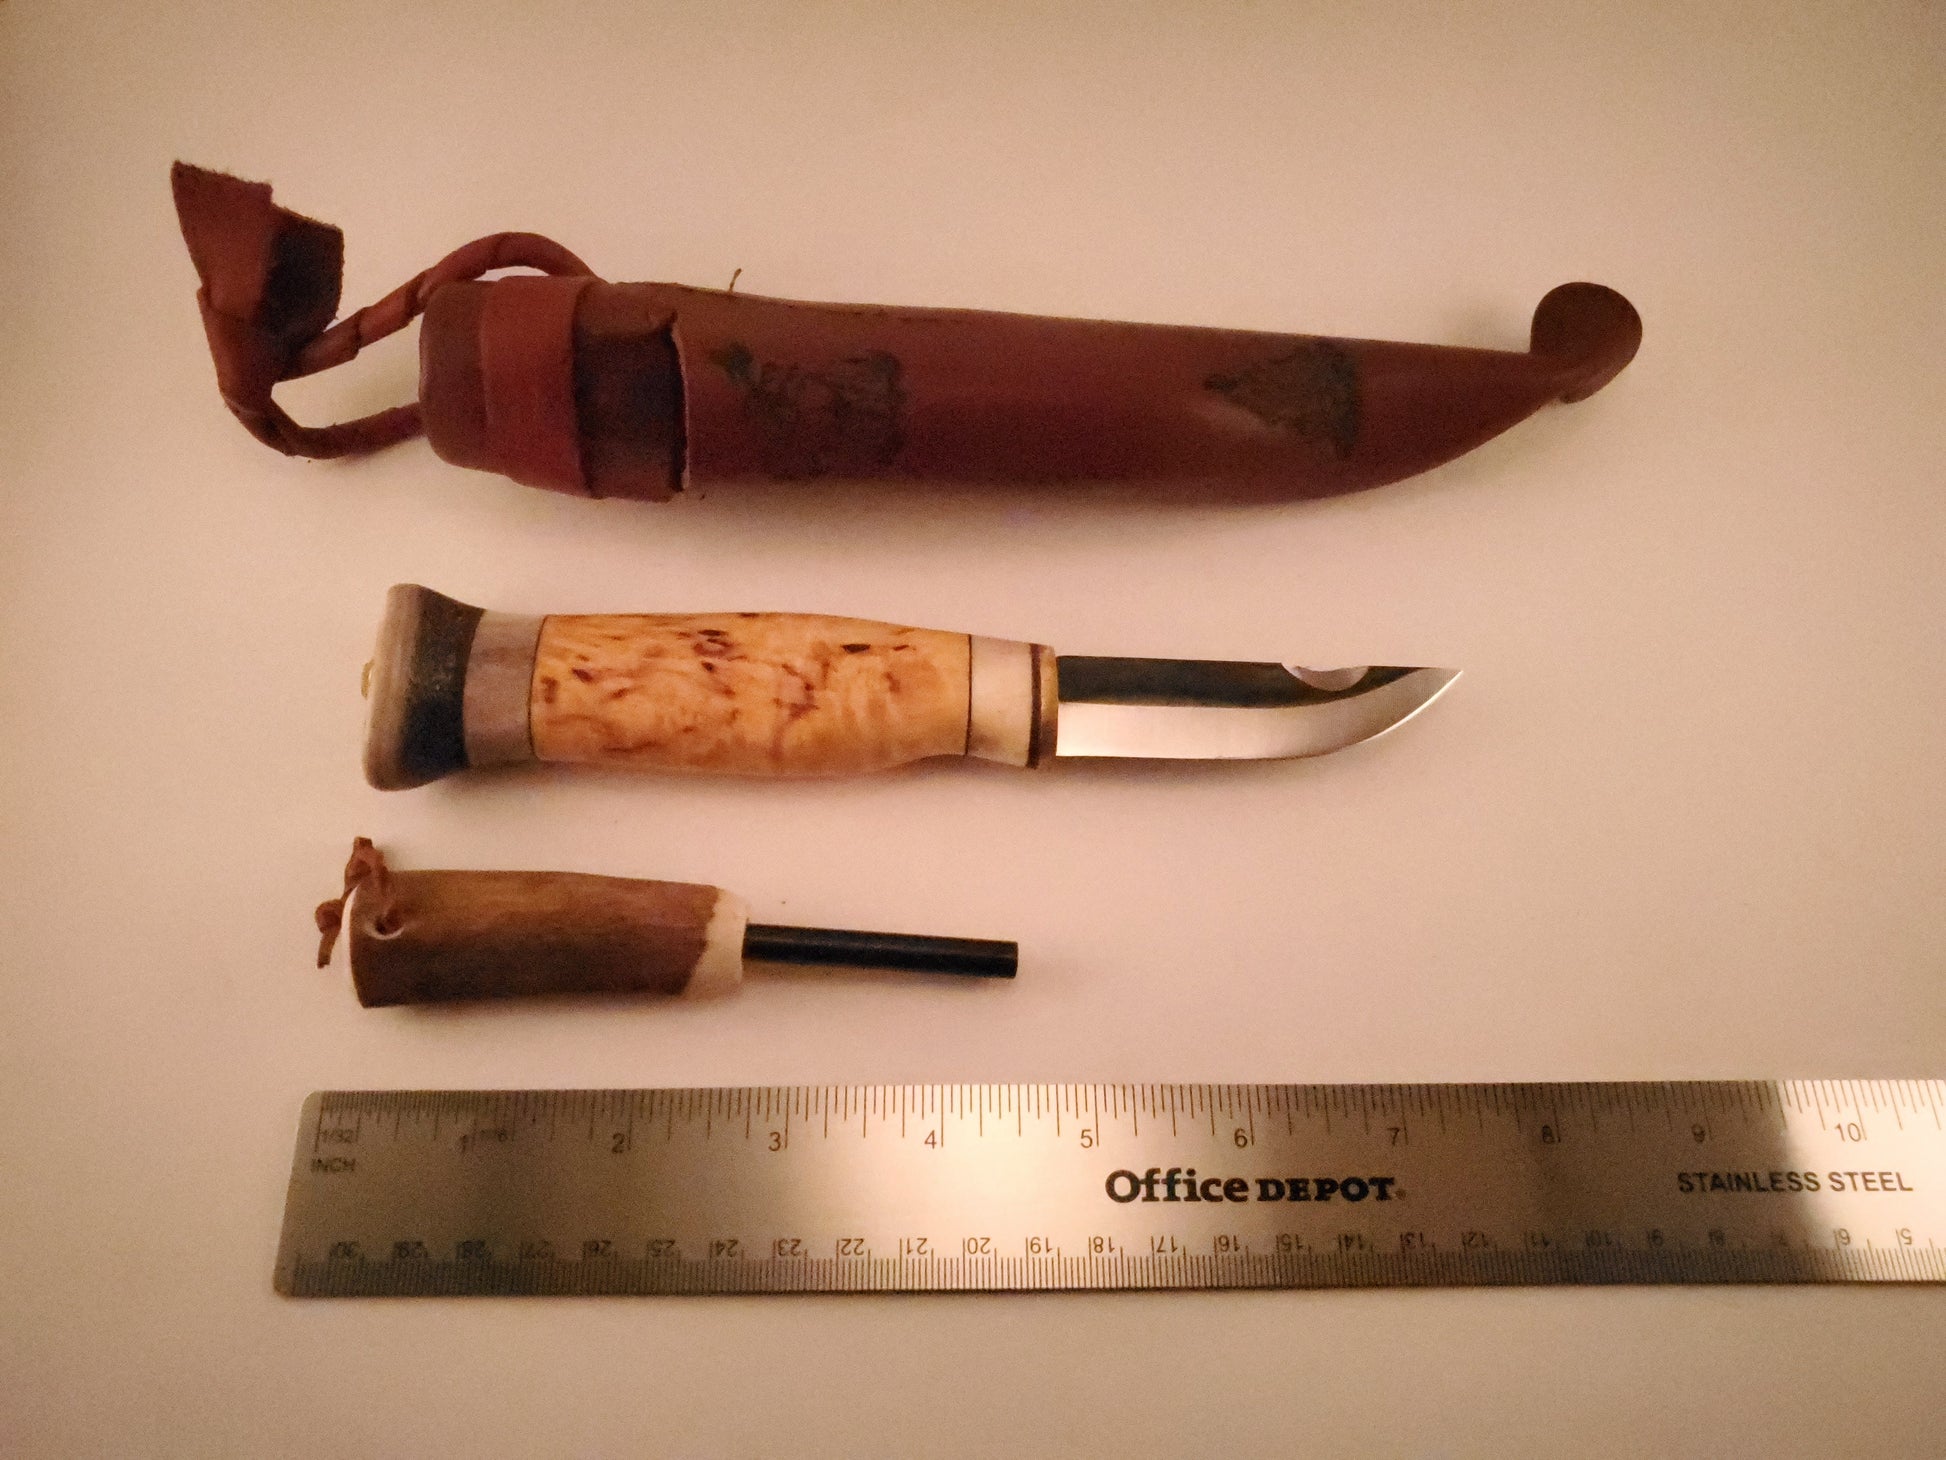 Wood Jewel Carving Knife With Firesteel Bushcraft Outdoor Puukko Knife